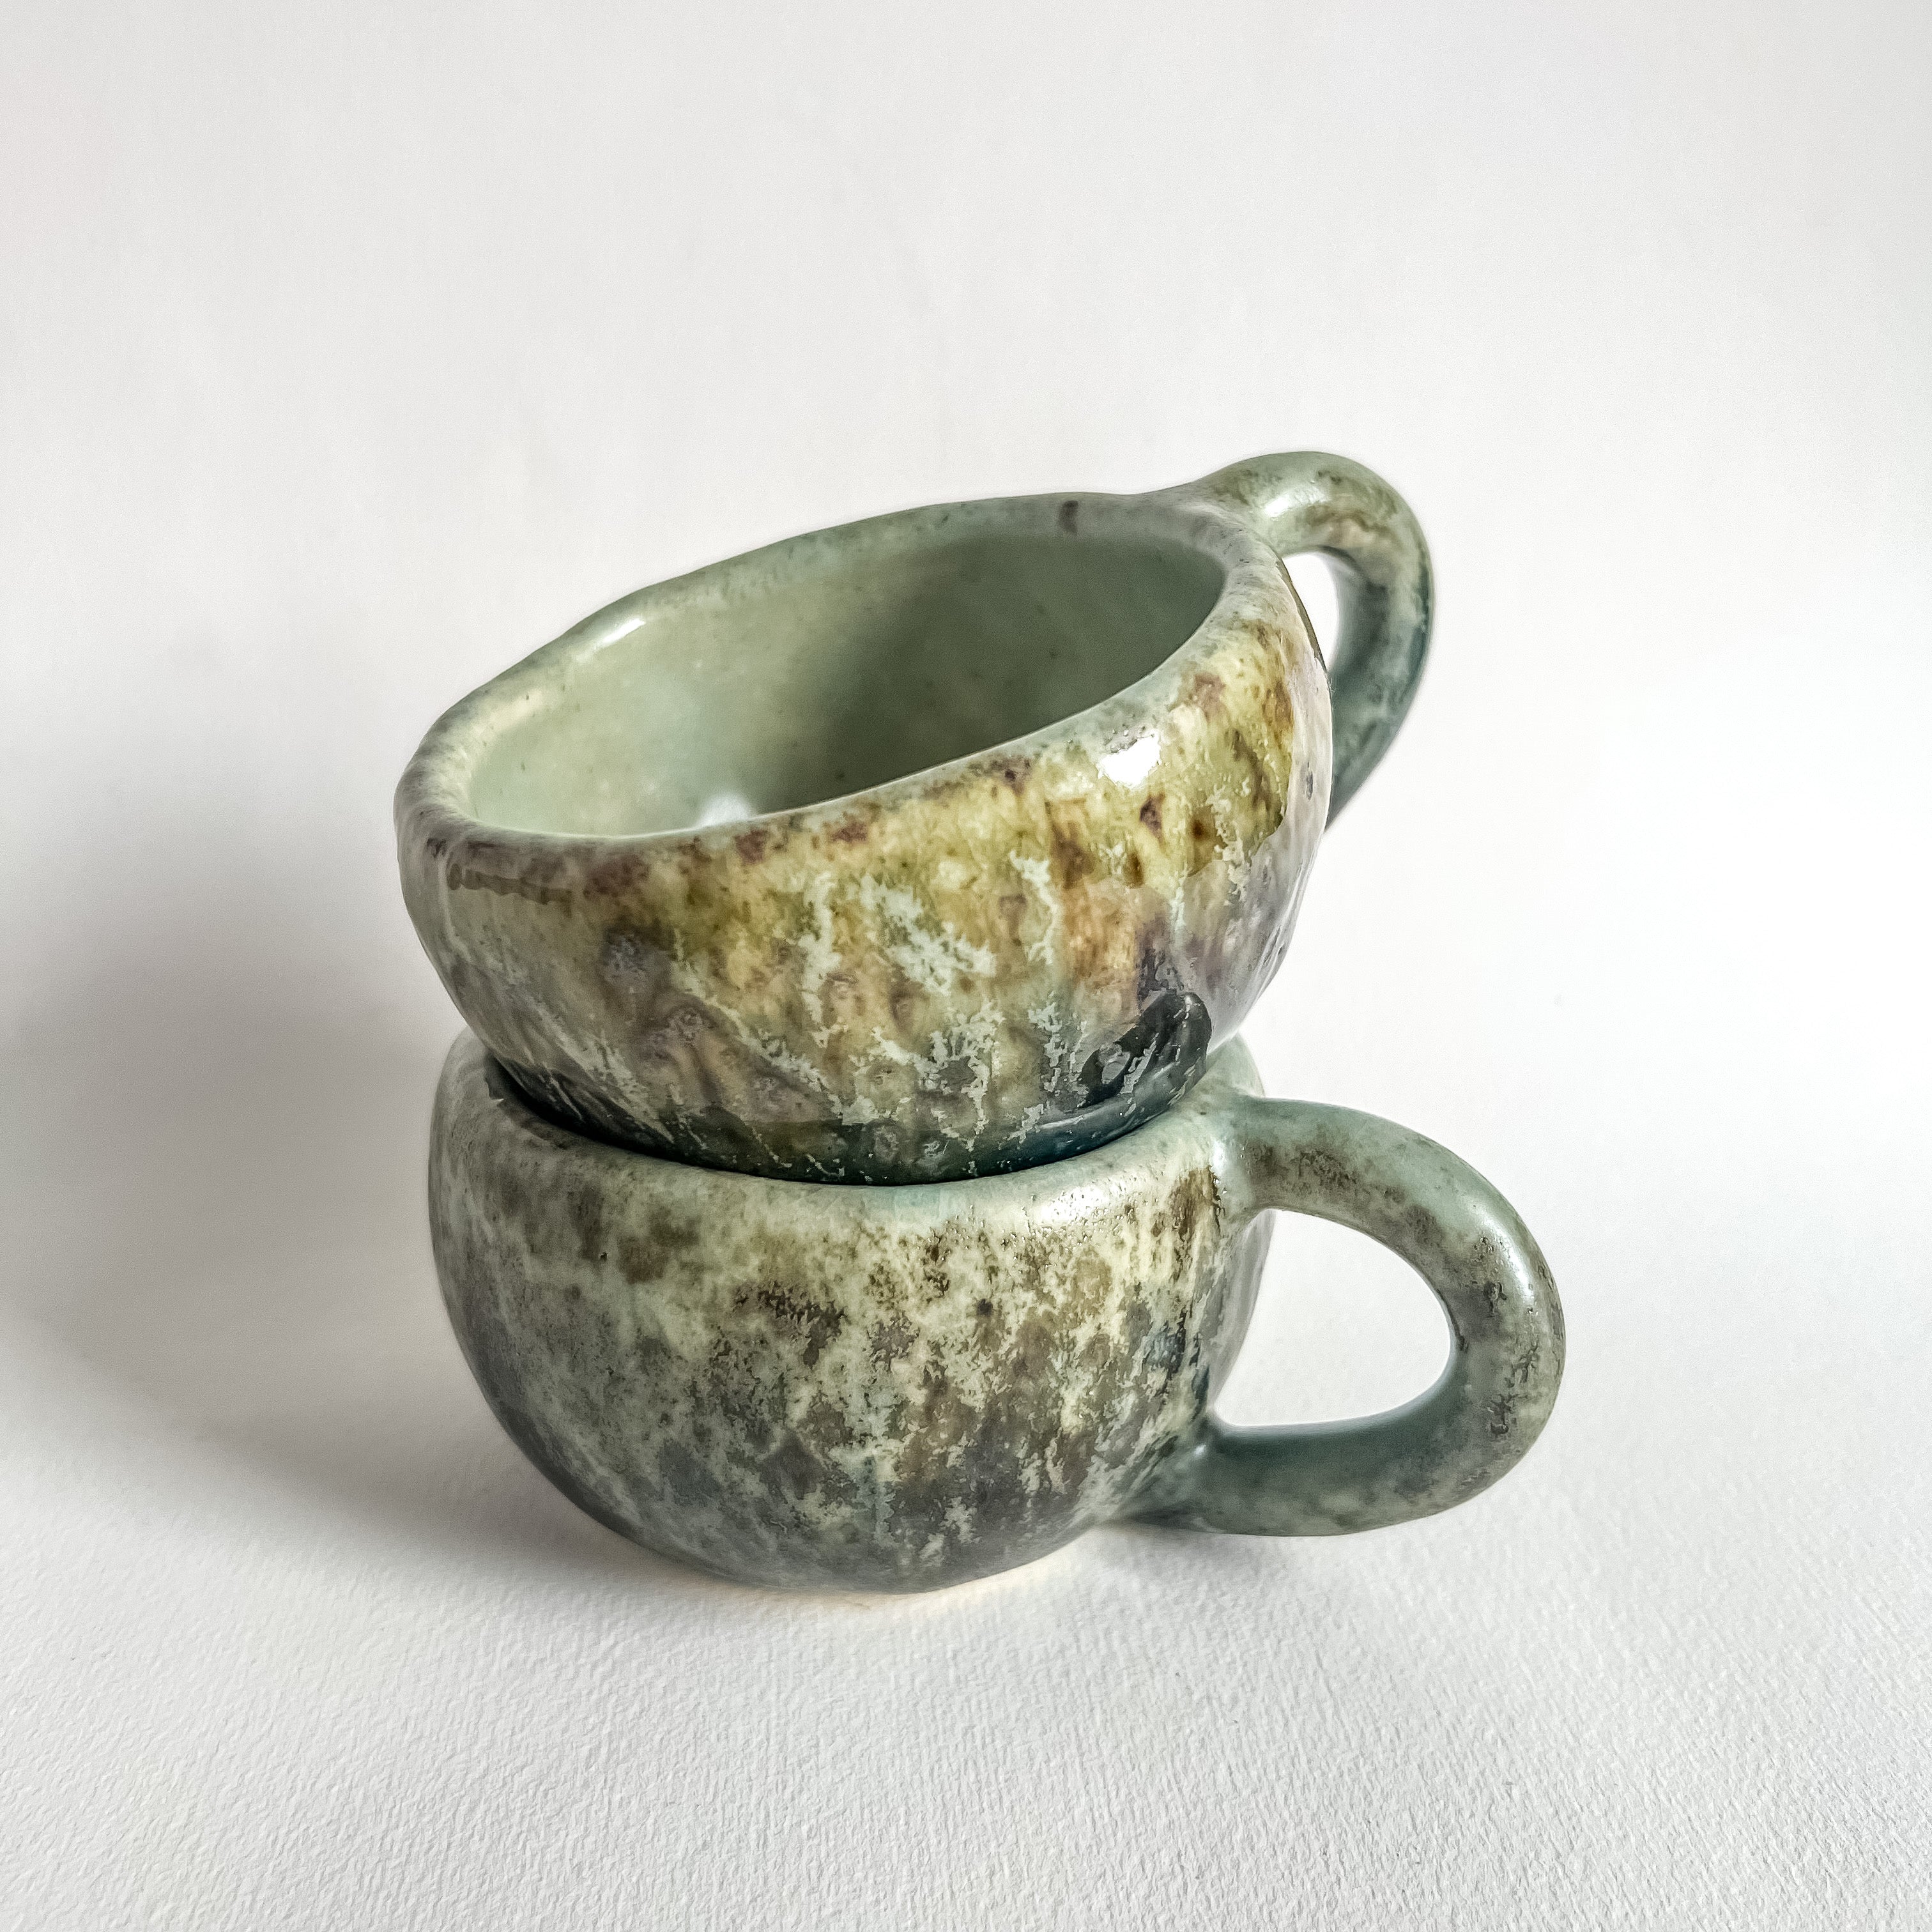 handmade green ceramic coffee mugs from Mexico